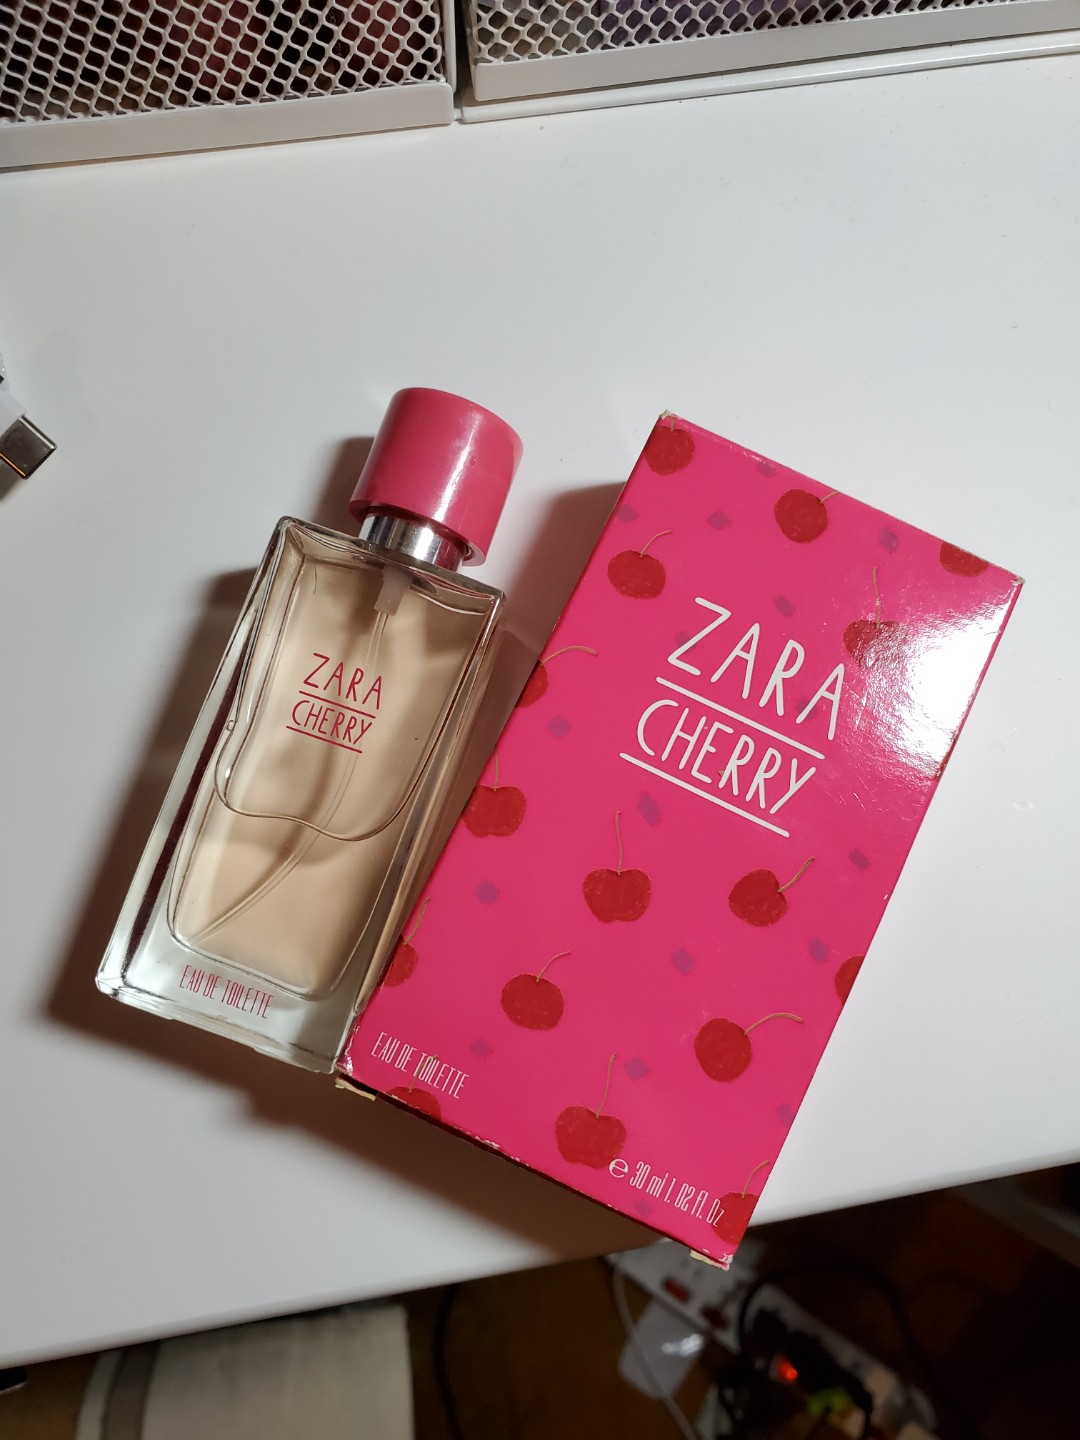 Zara Cherry香水 美妝保養 香體噴霧在旋轉拍賣